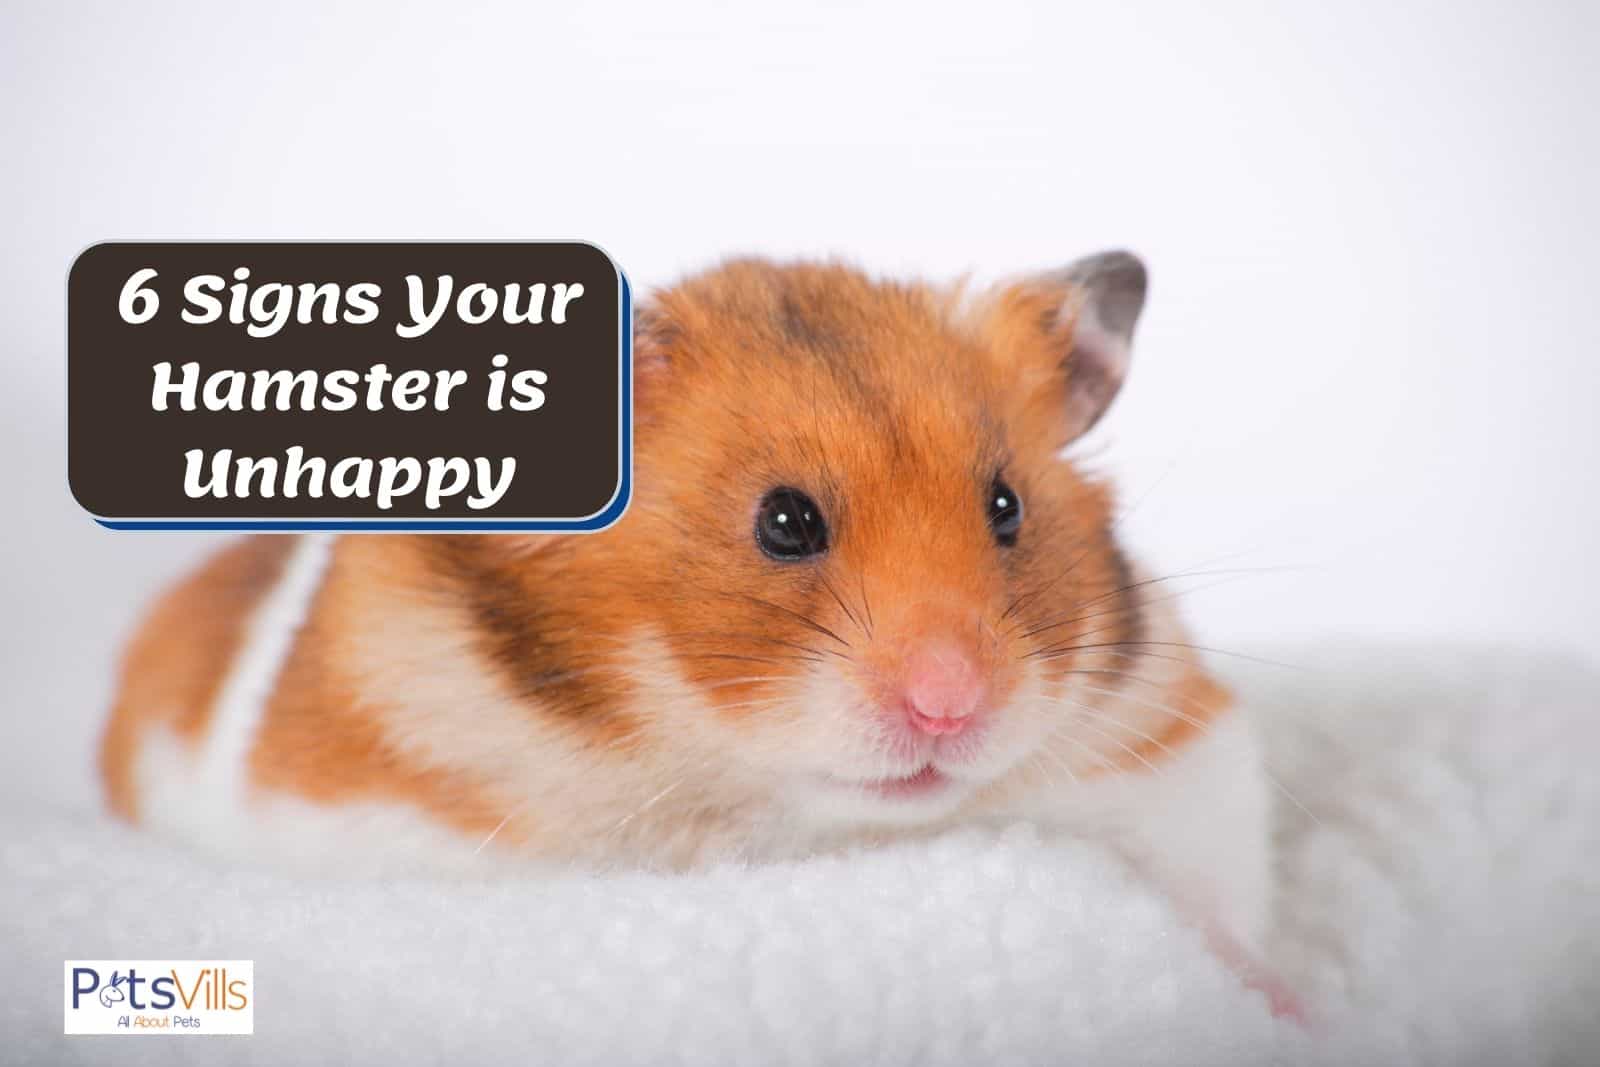 a cute hamster in sad mood